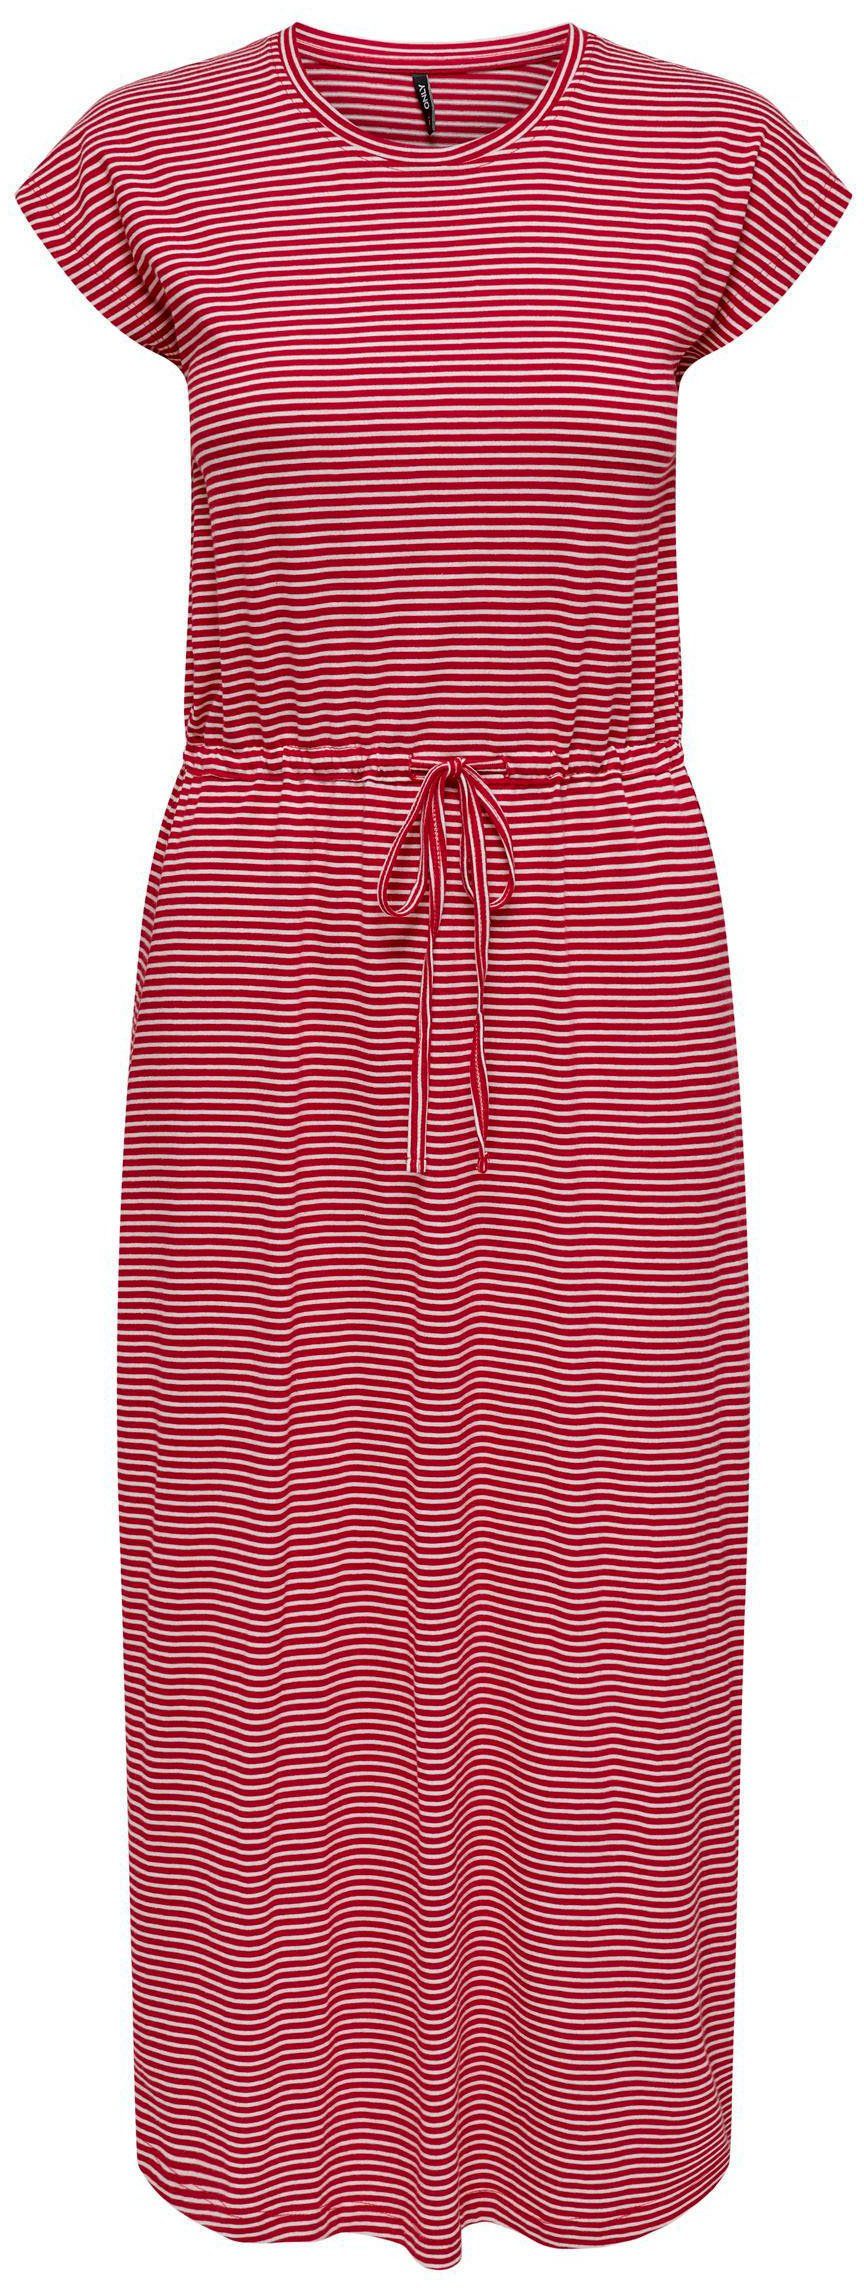 Optik In Jerseykleid ONLMAY Streifen STRIPE Red ONLY Stripes MIDI Risk High S/S DRESS